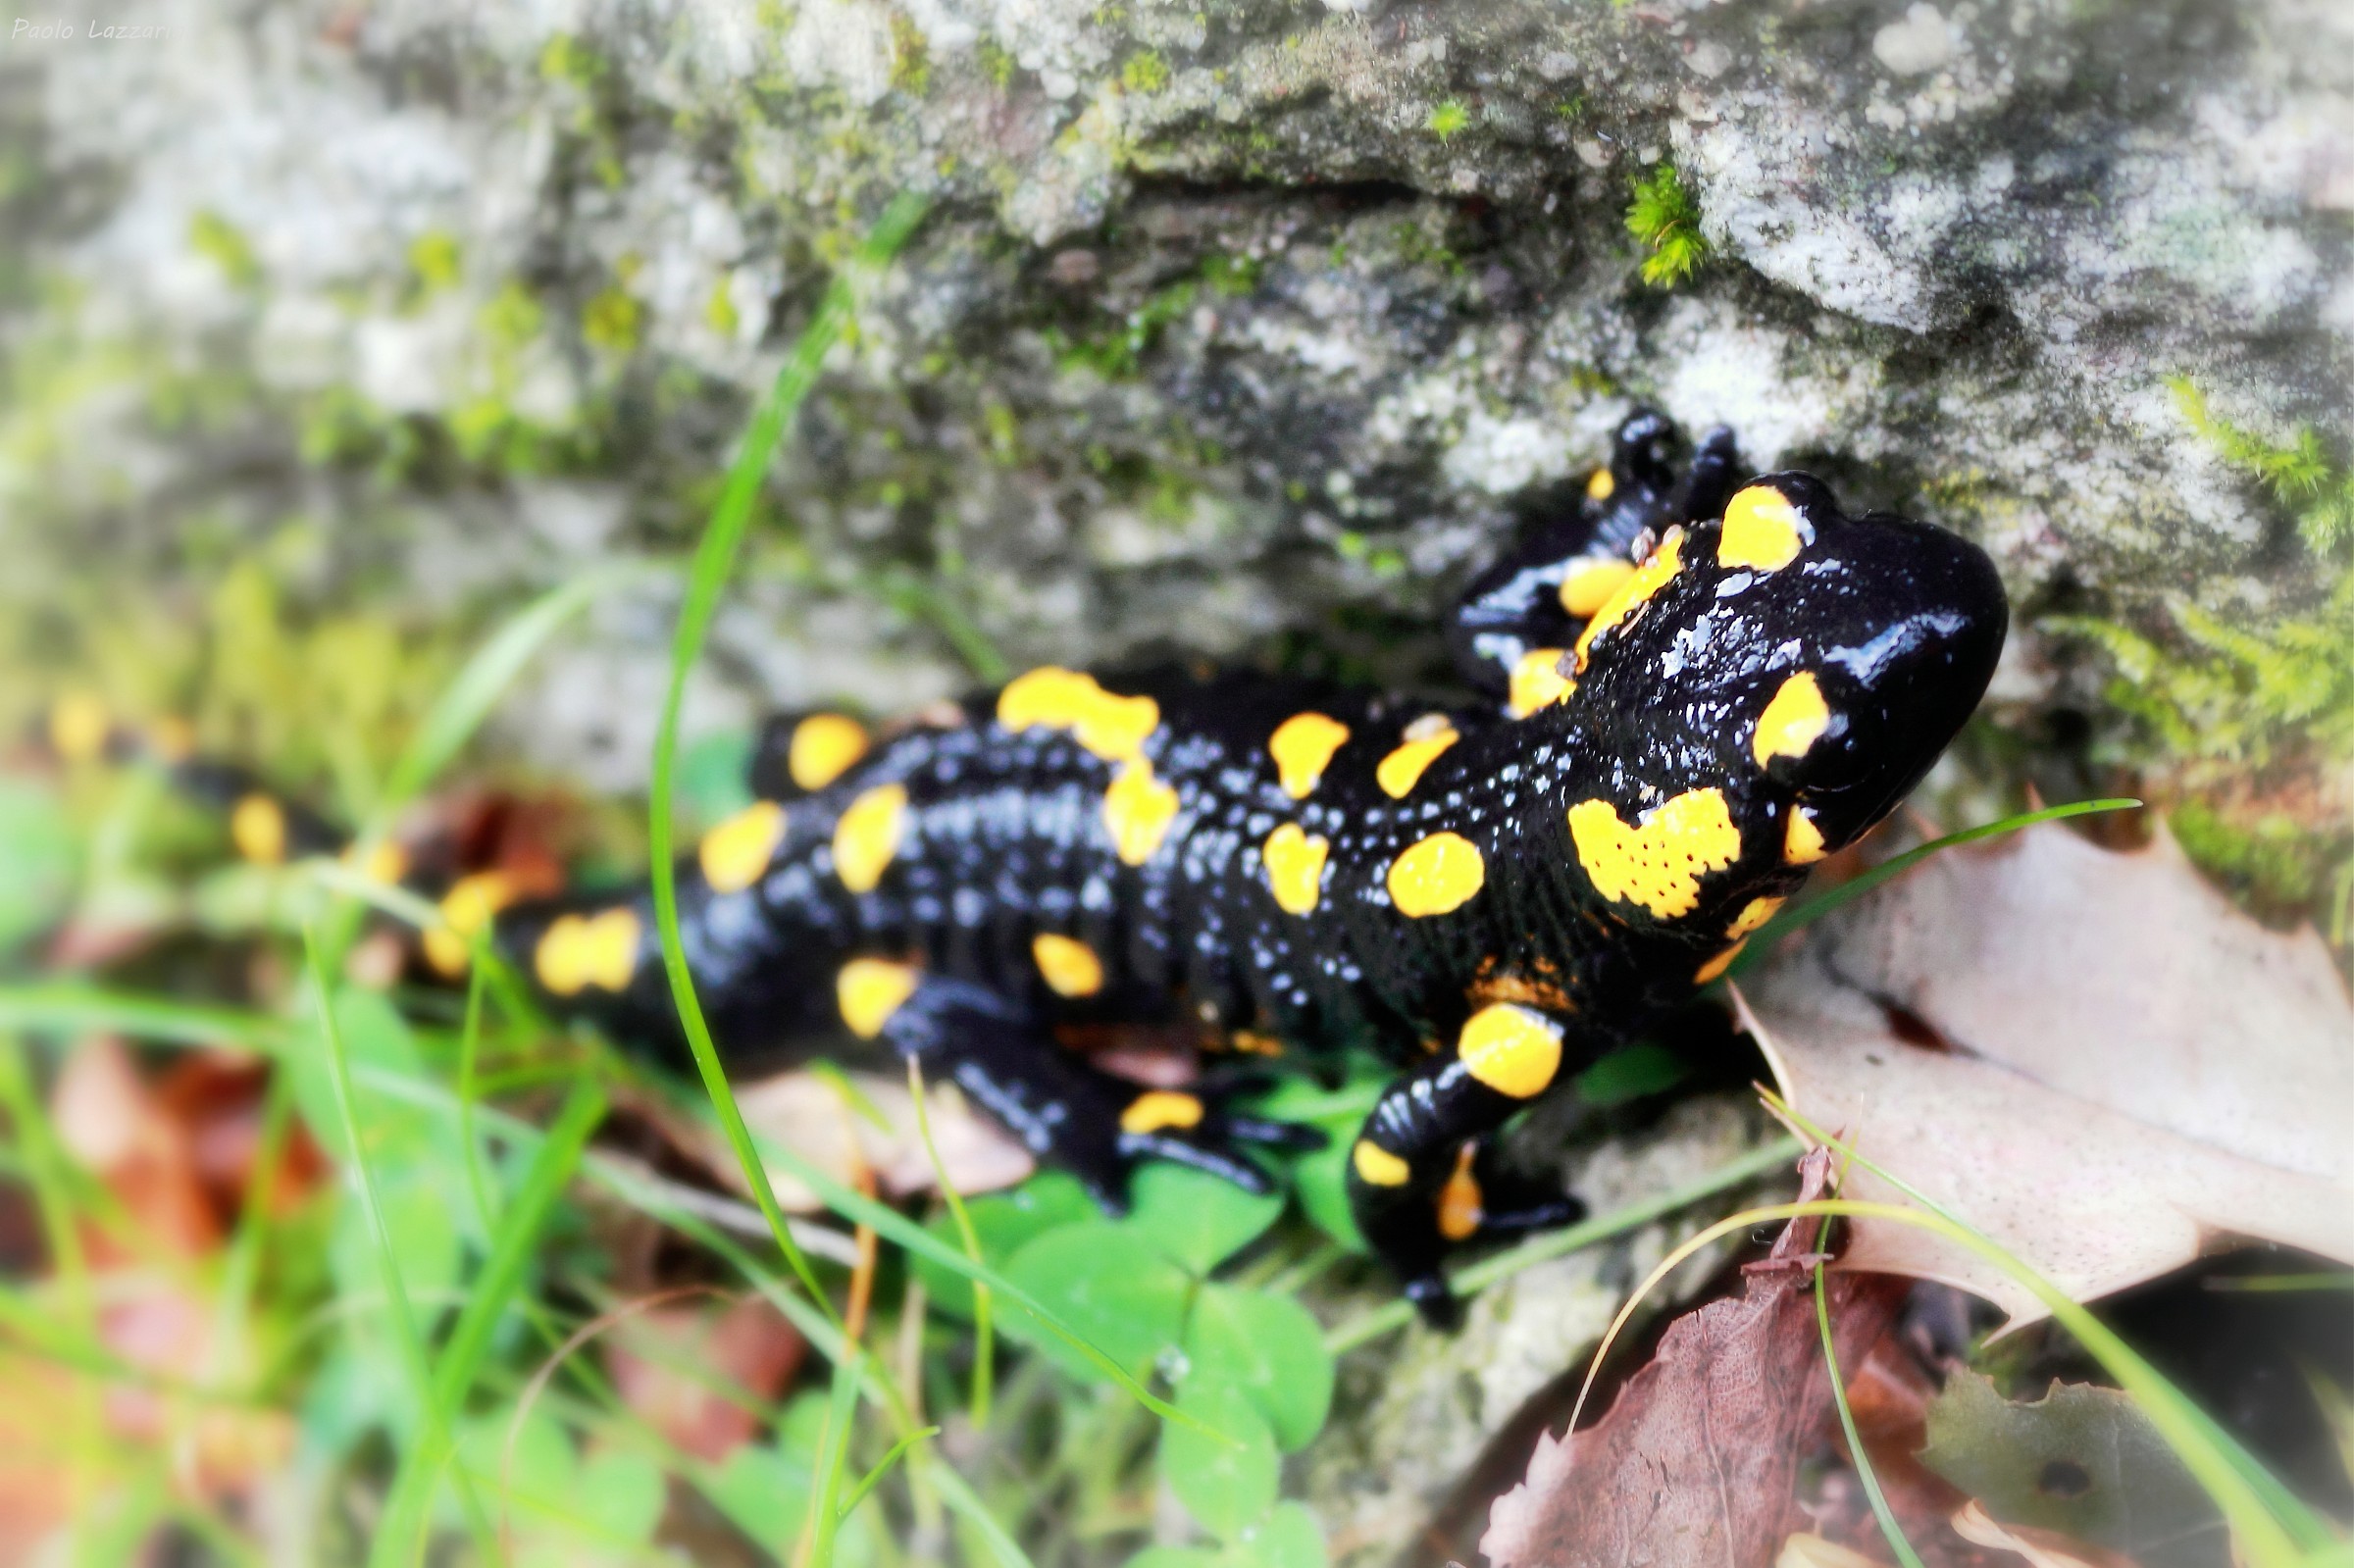 The salamander Montepiatto...